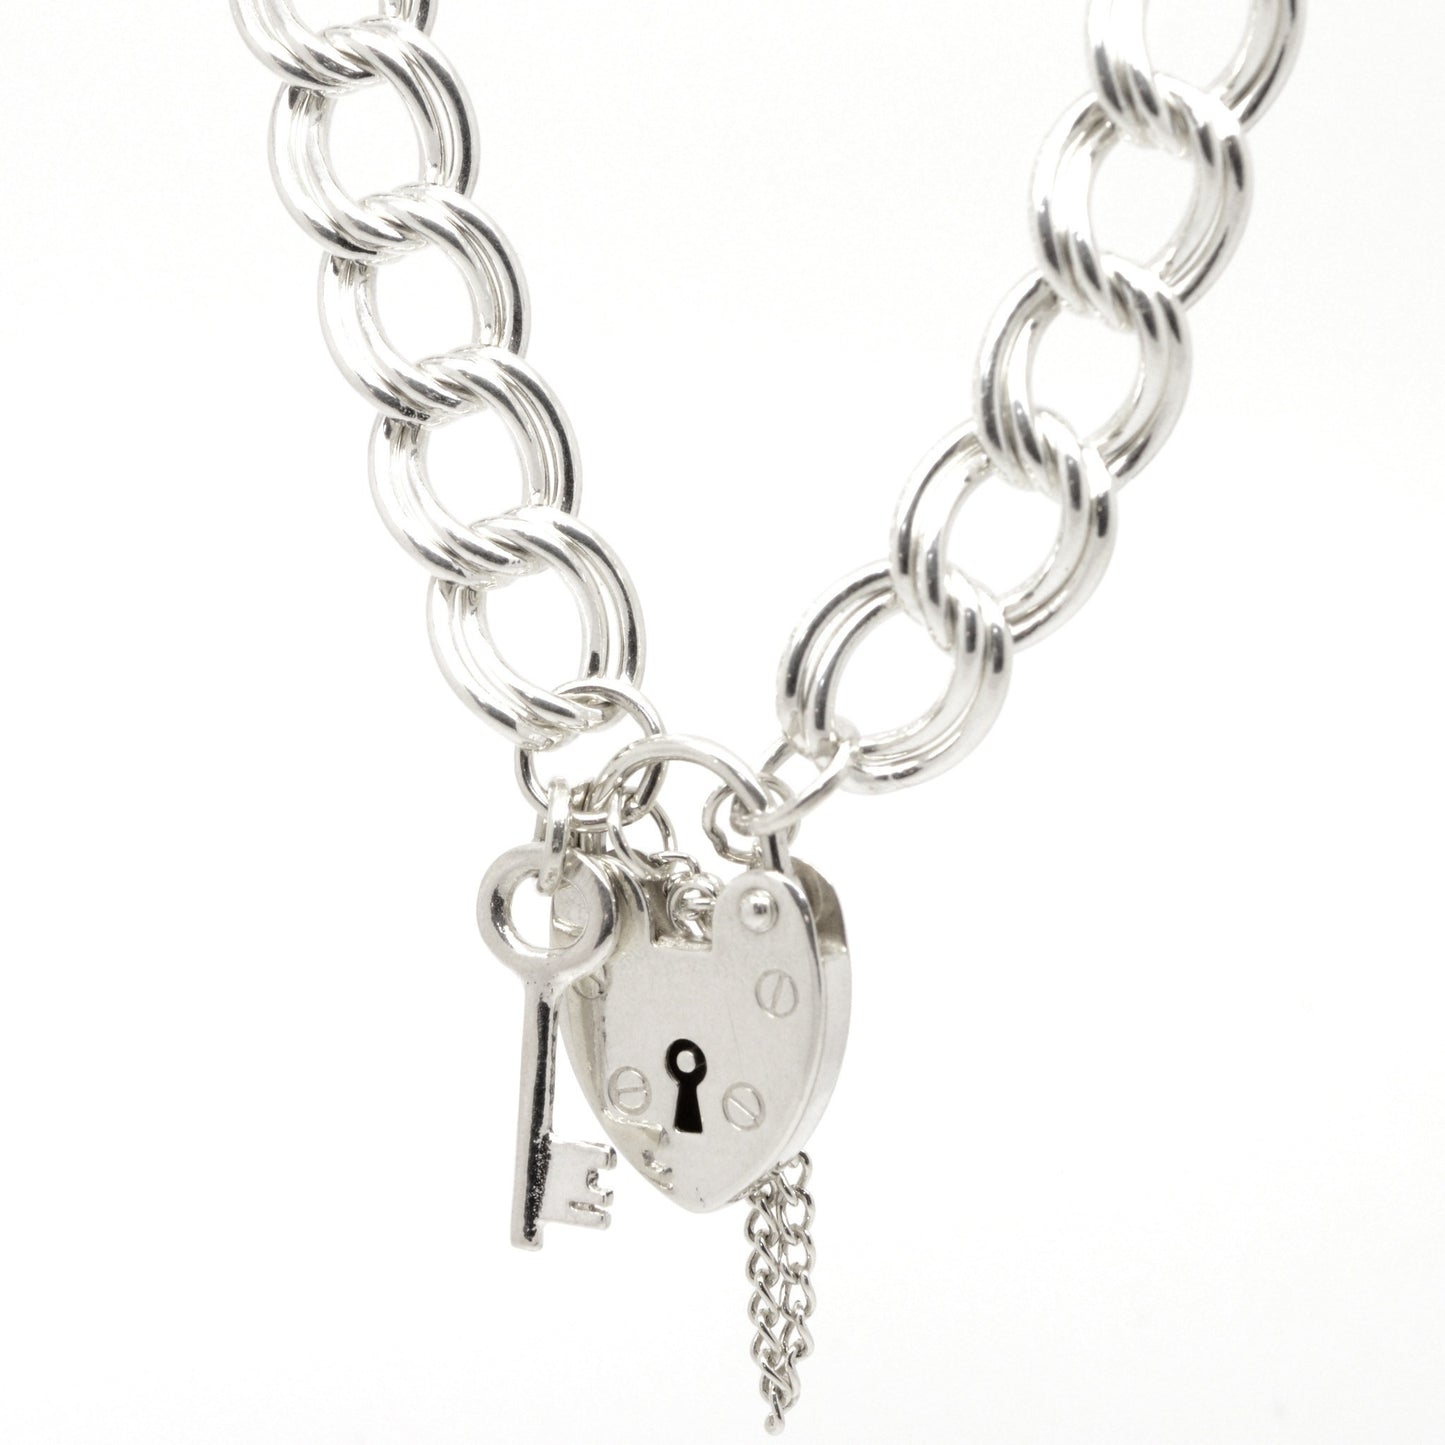 Large Double Curb Charm Bracelet with Padlock - Perfectcharm - 2